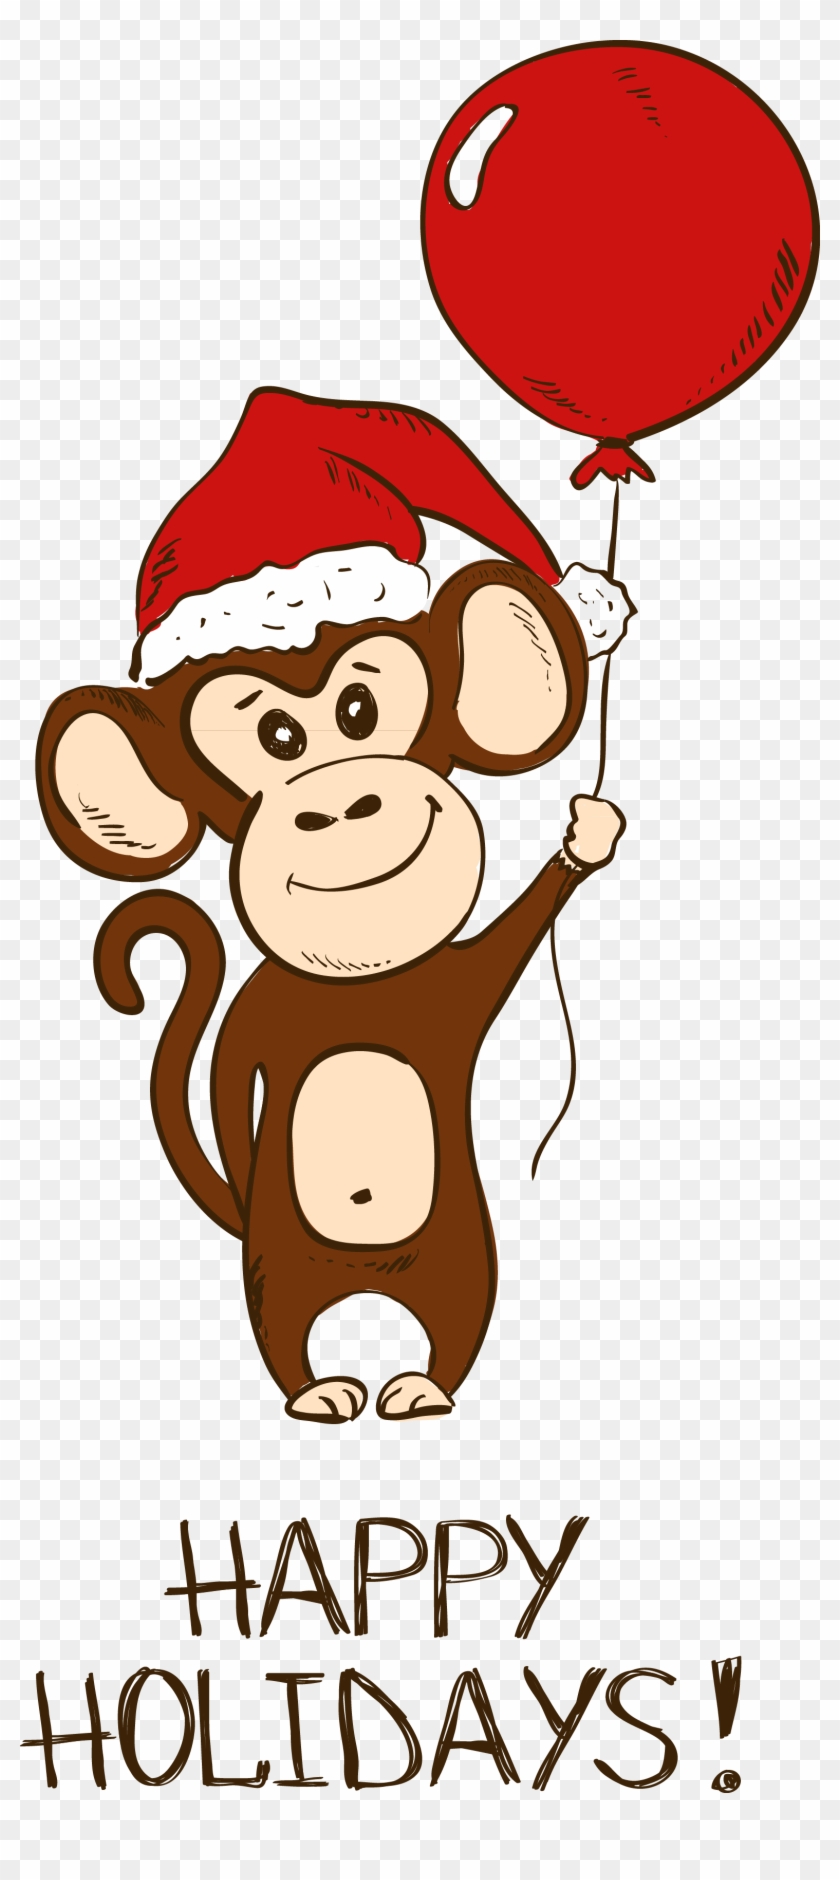 Santa Claus Christmas Cartoon Monkey - Santa Claus Christmas Cartoon Monkey #363924